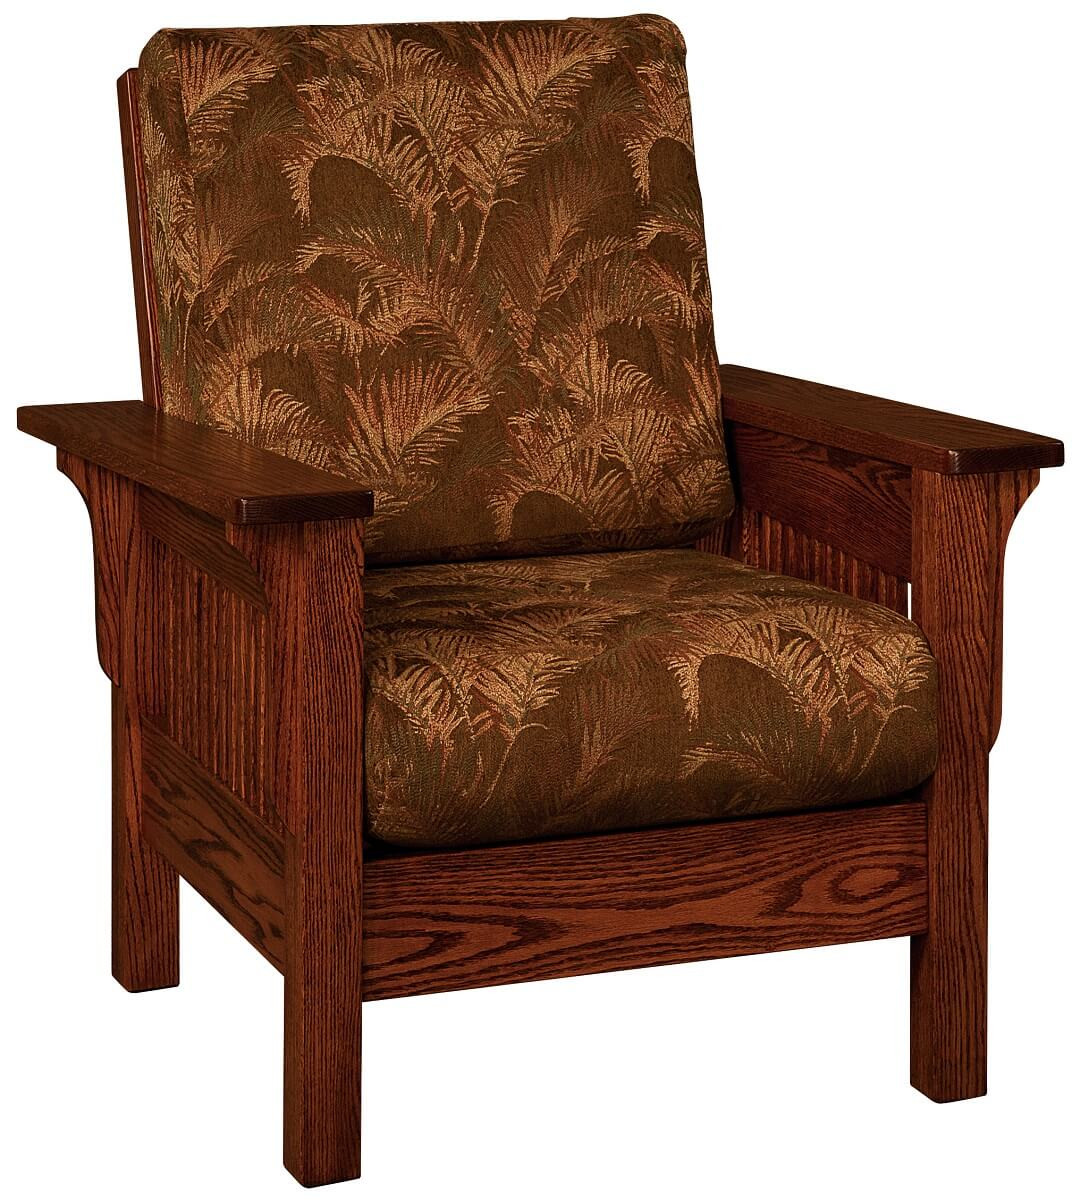 Rushmore Solid Oak Chair